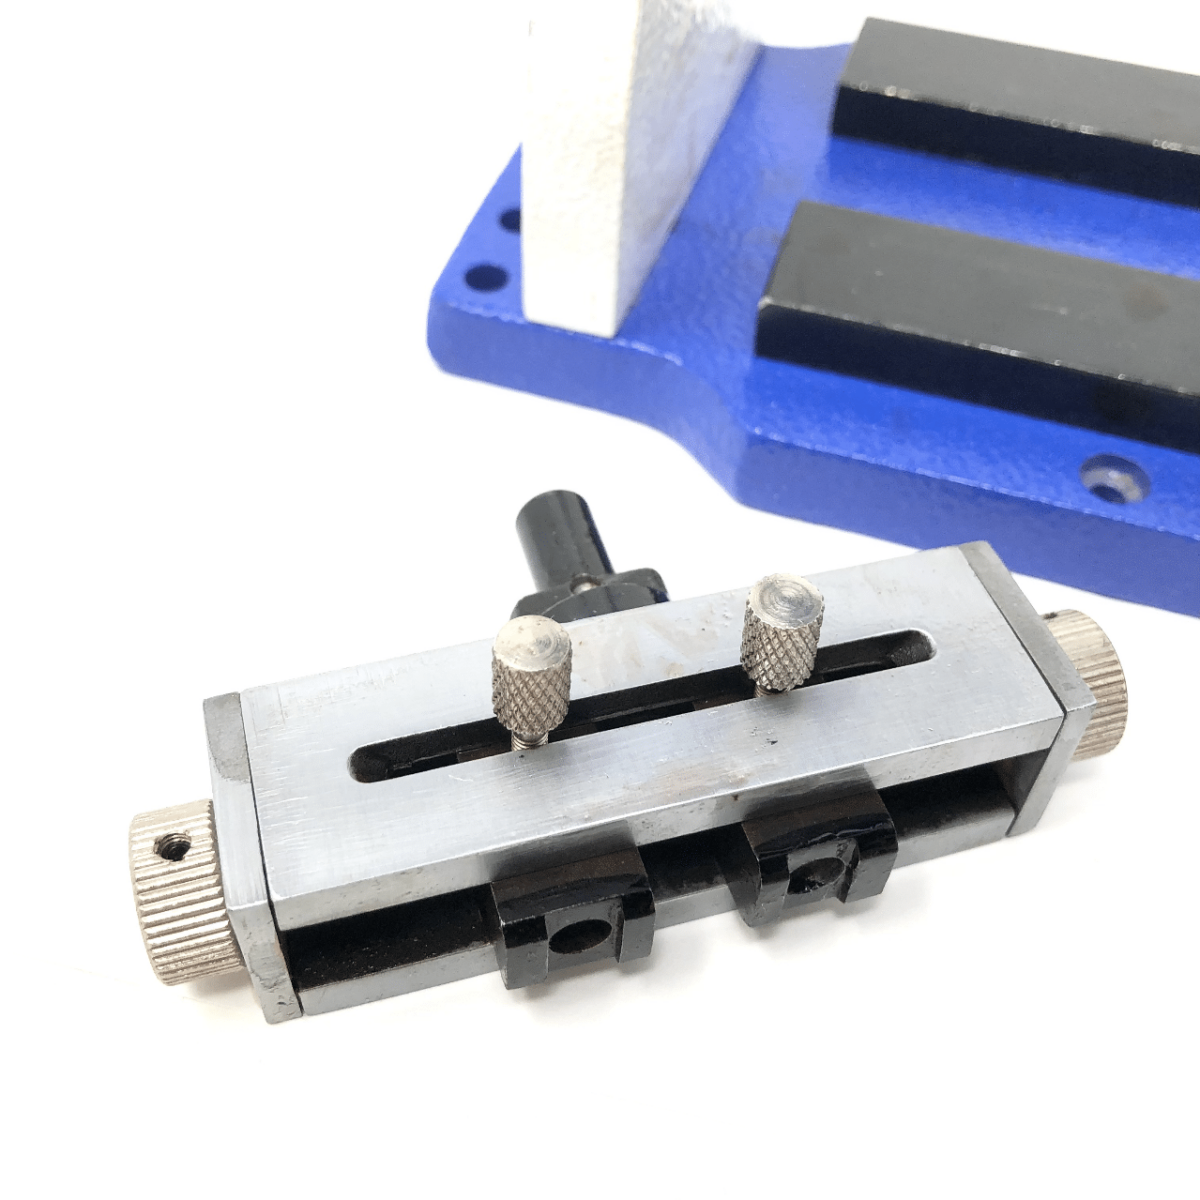 Watch Back Case Opener Adjustable Press Jaxa Pins Opens Waterproof Backs 194350263457 5 - Maddisons UK